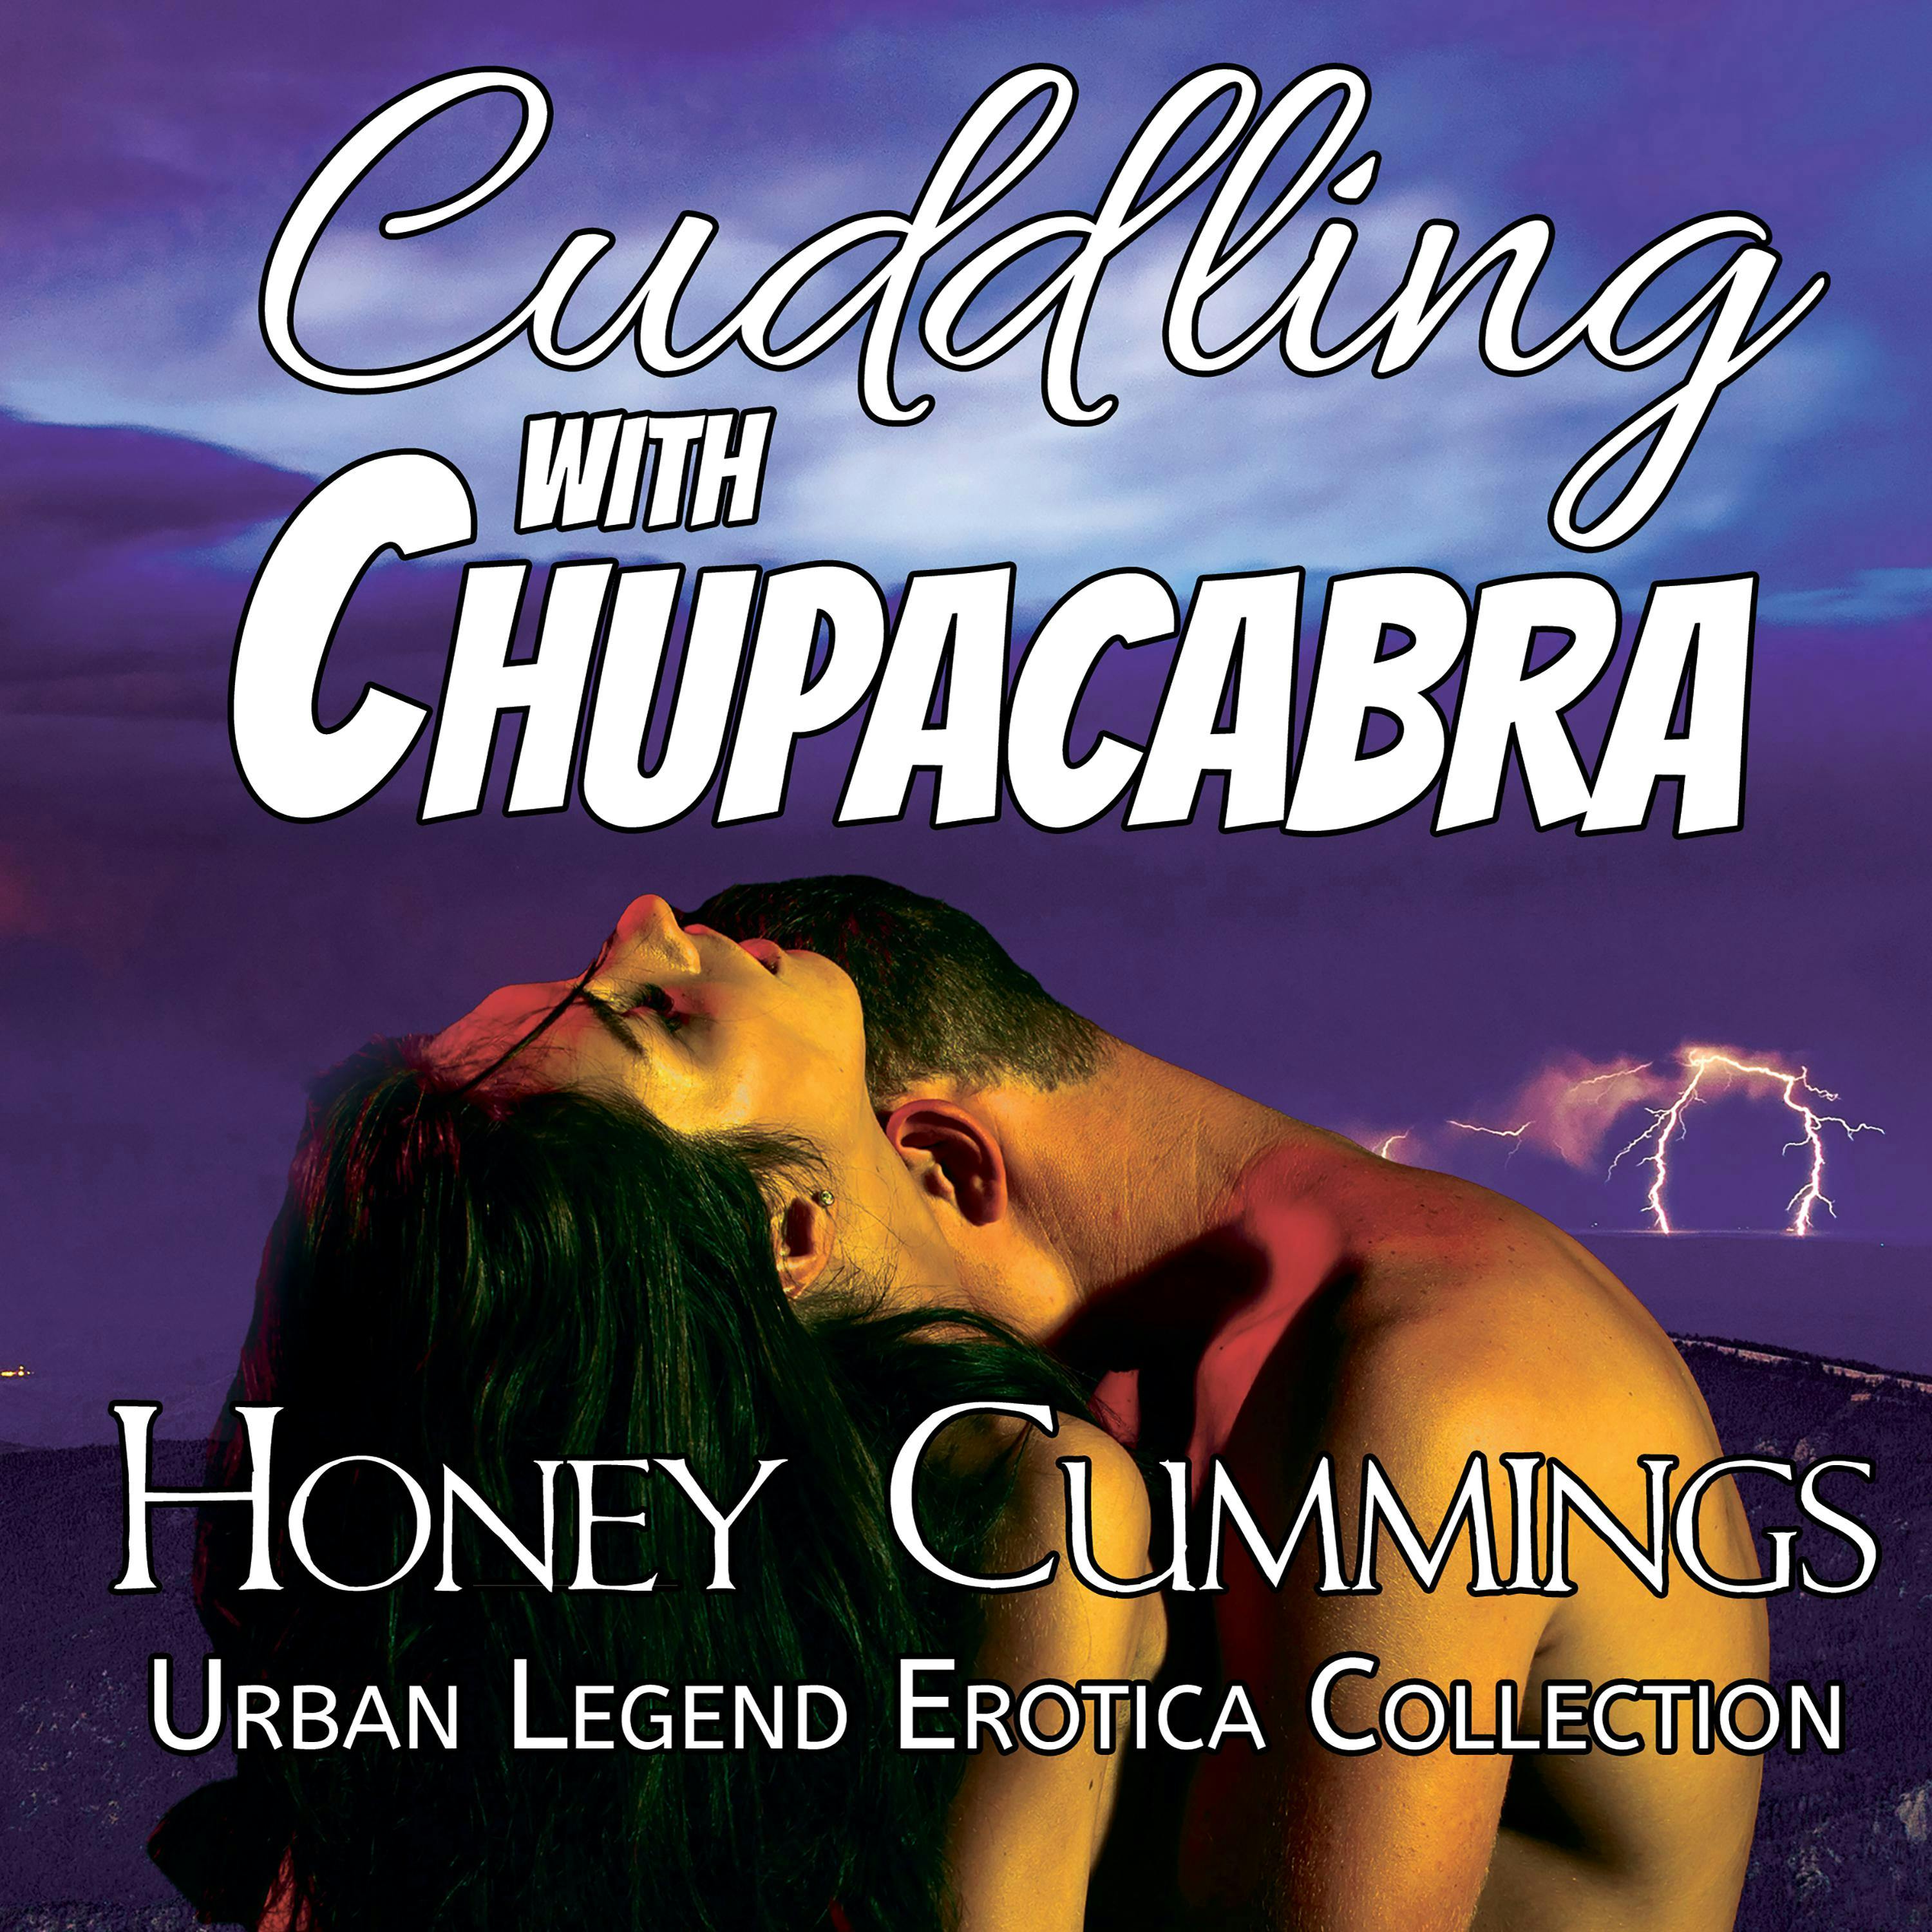 Cuddling with Chupacabra - Paul Leonard, Honey Cummings